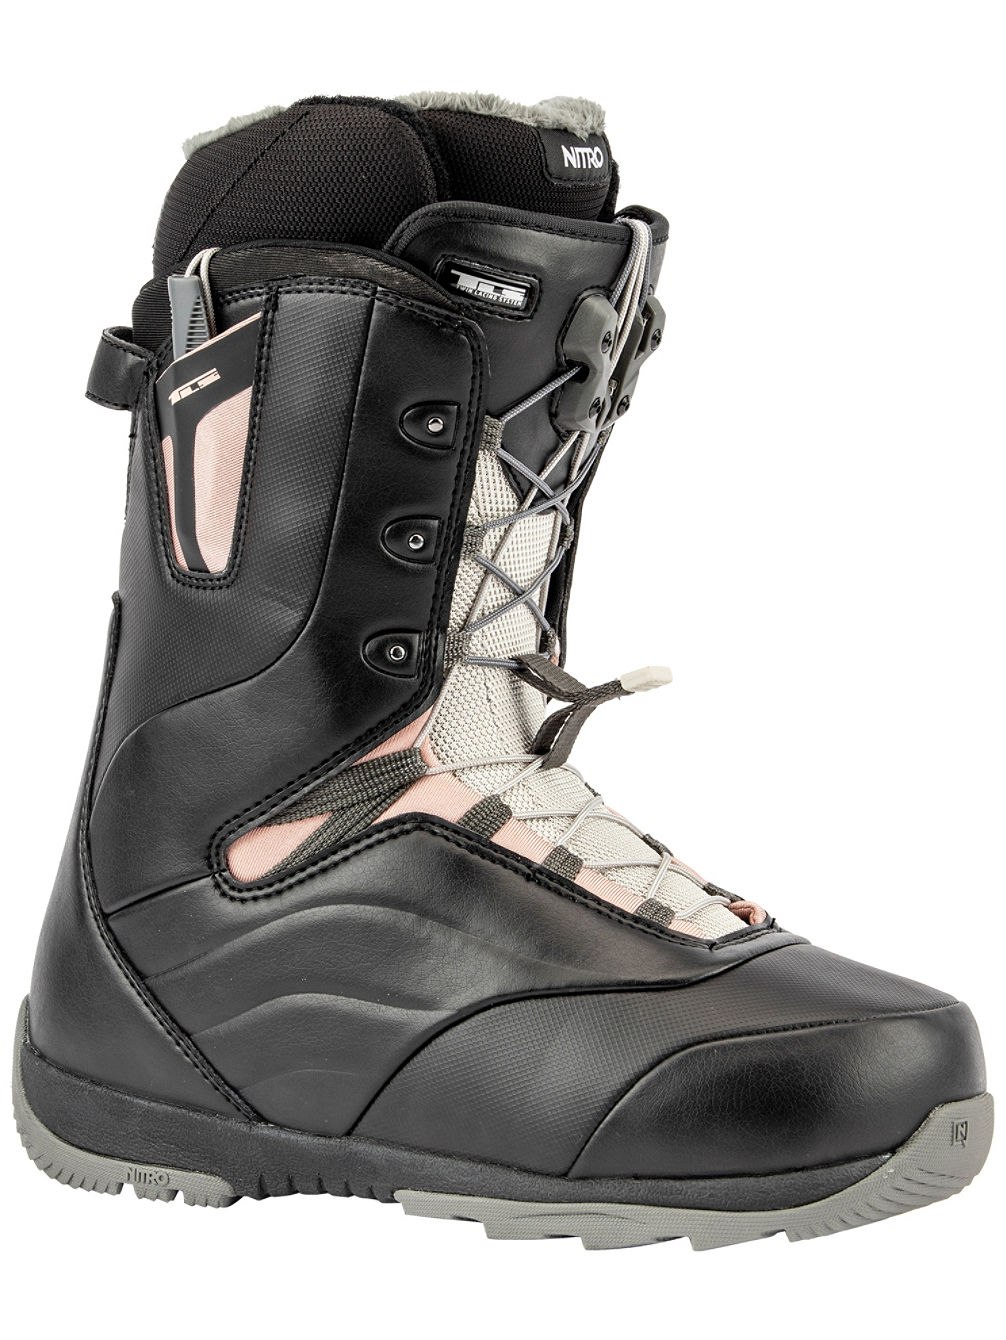 Crown TLS Snowboard Boots